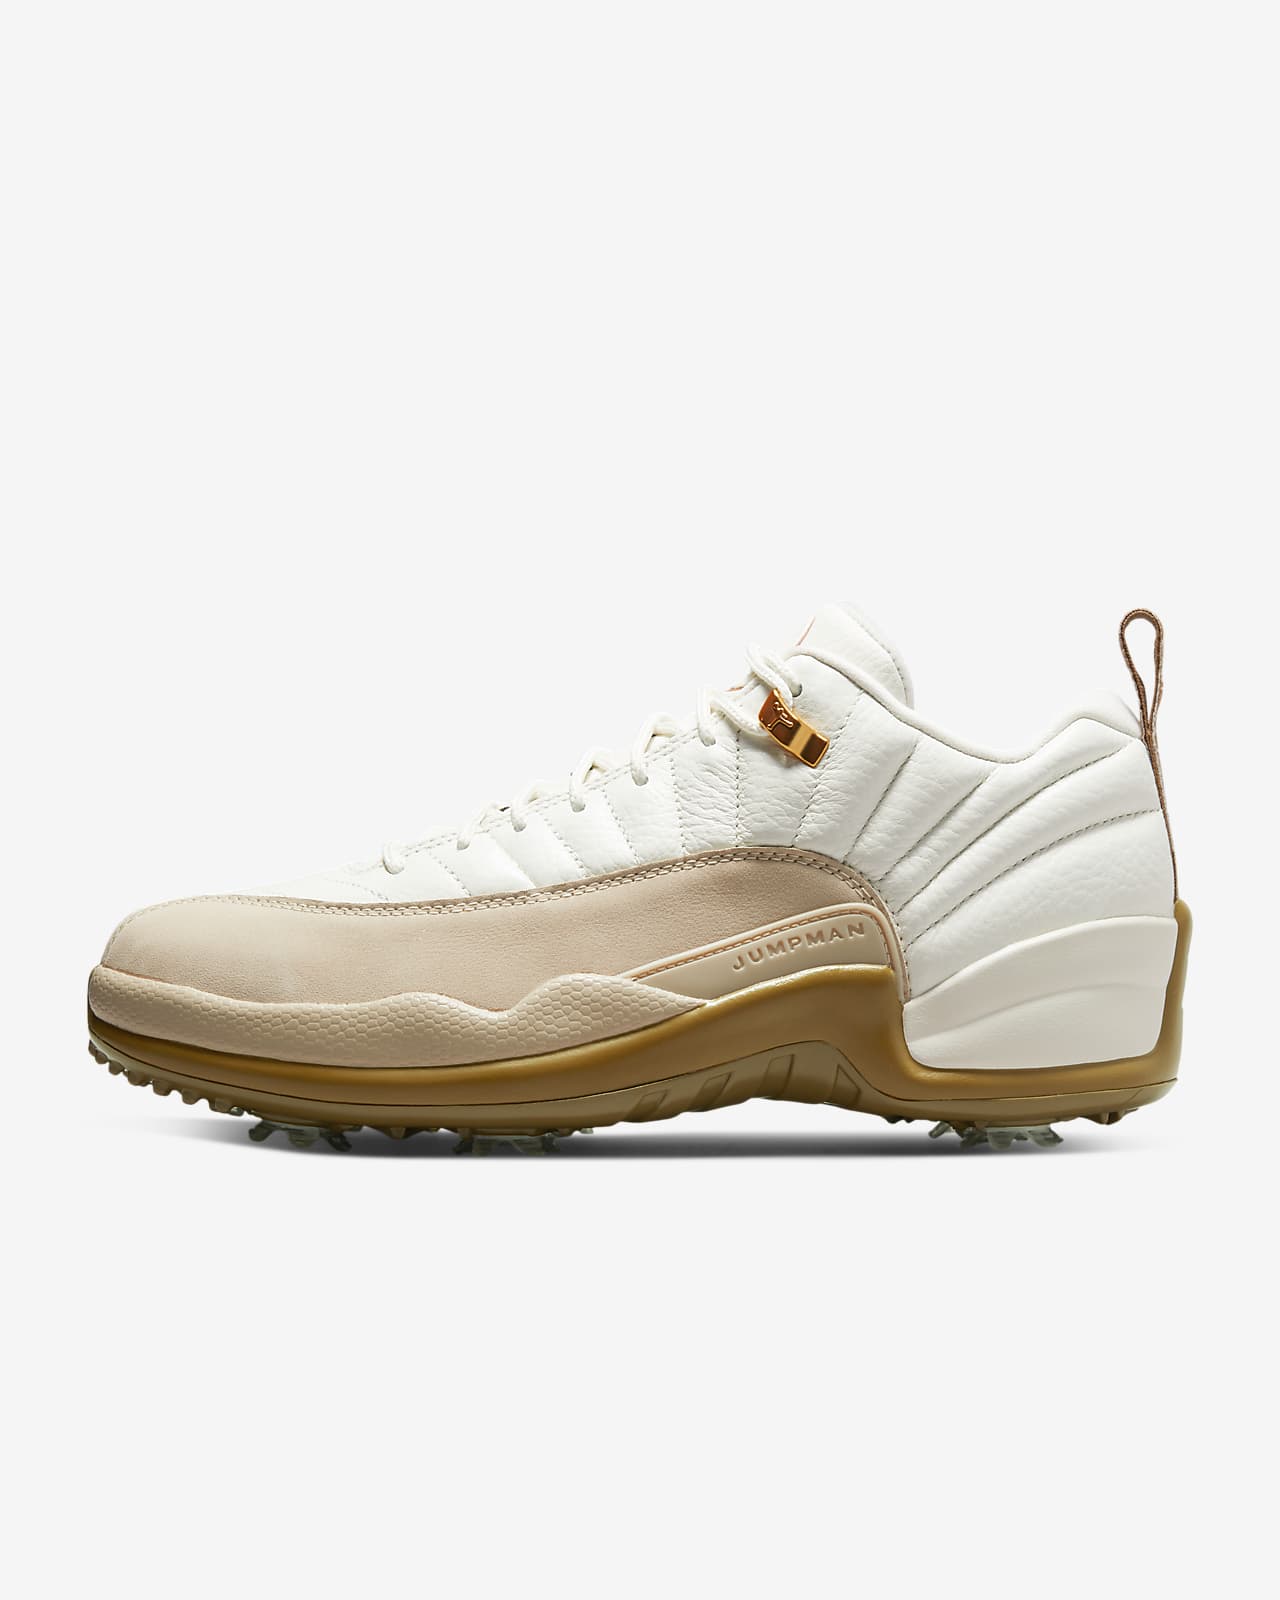 Jordan XII G Golf Shoes